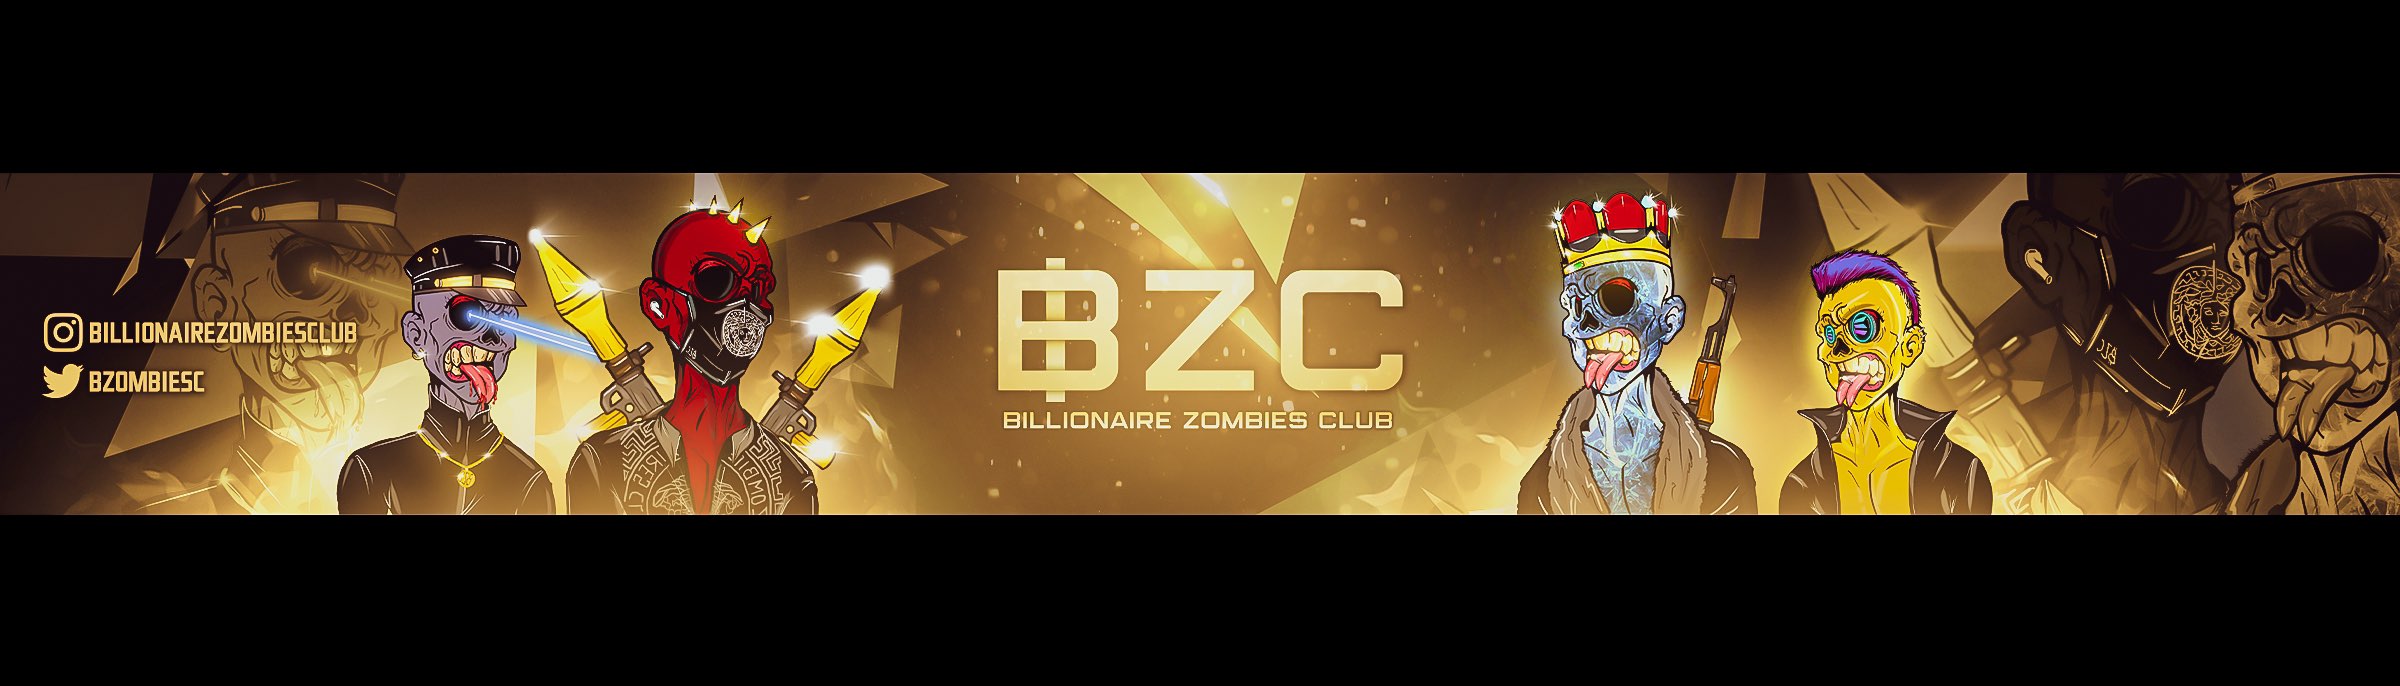 Billionaire Zombies Club